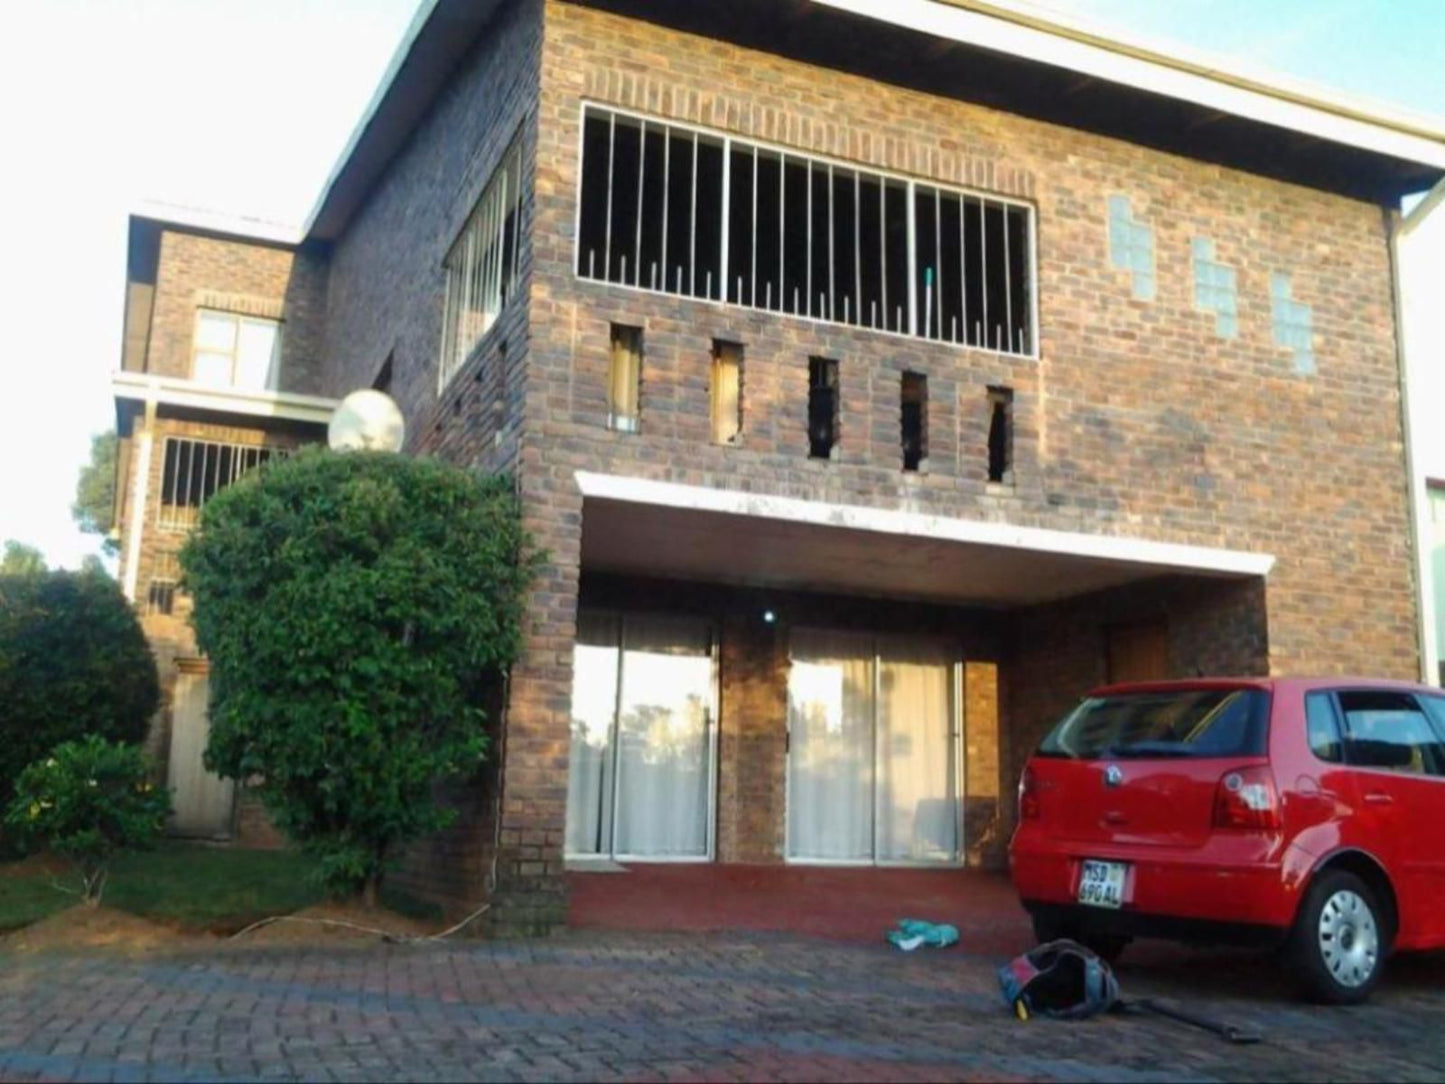 Hamba Kangane Ma Africa Guest House Graskop Mpumalanga South Africa House, Building, Architecture, Window, Car, Vehicle